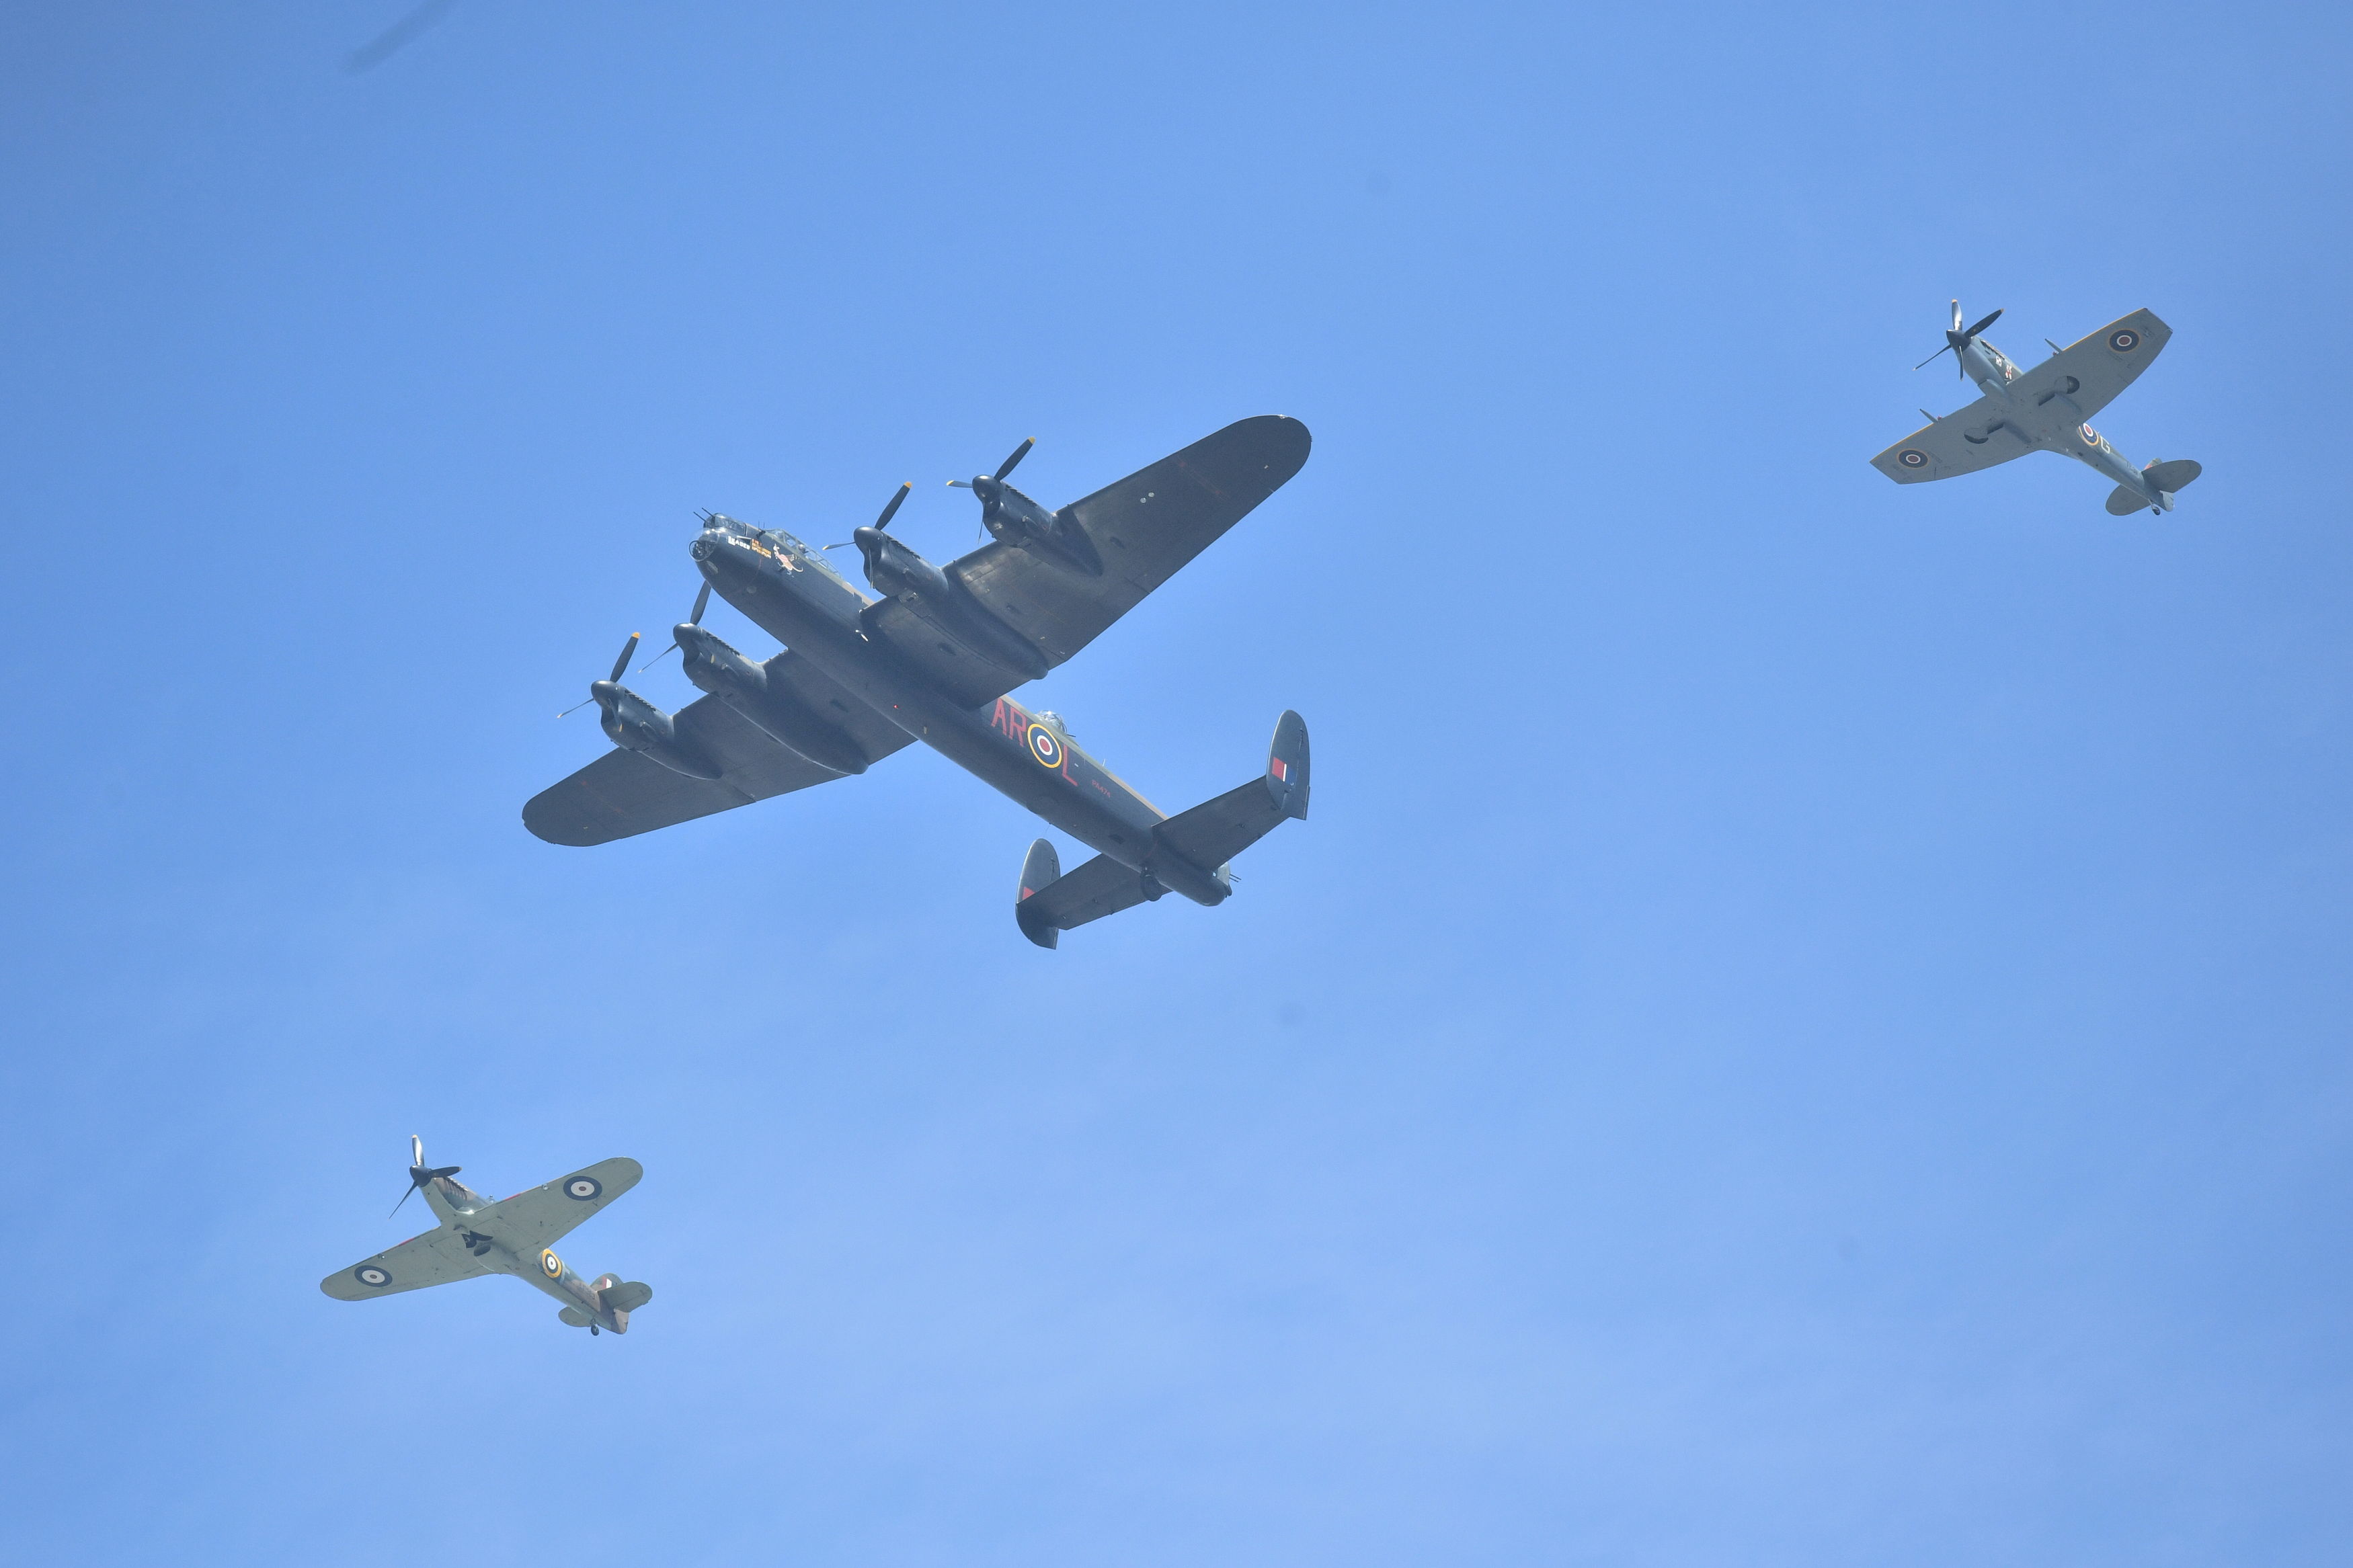 Spitfires escort a Lancaster during a flypast over Buckingham Palace